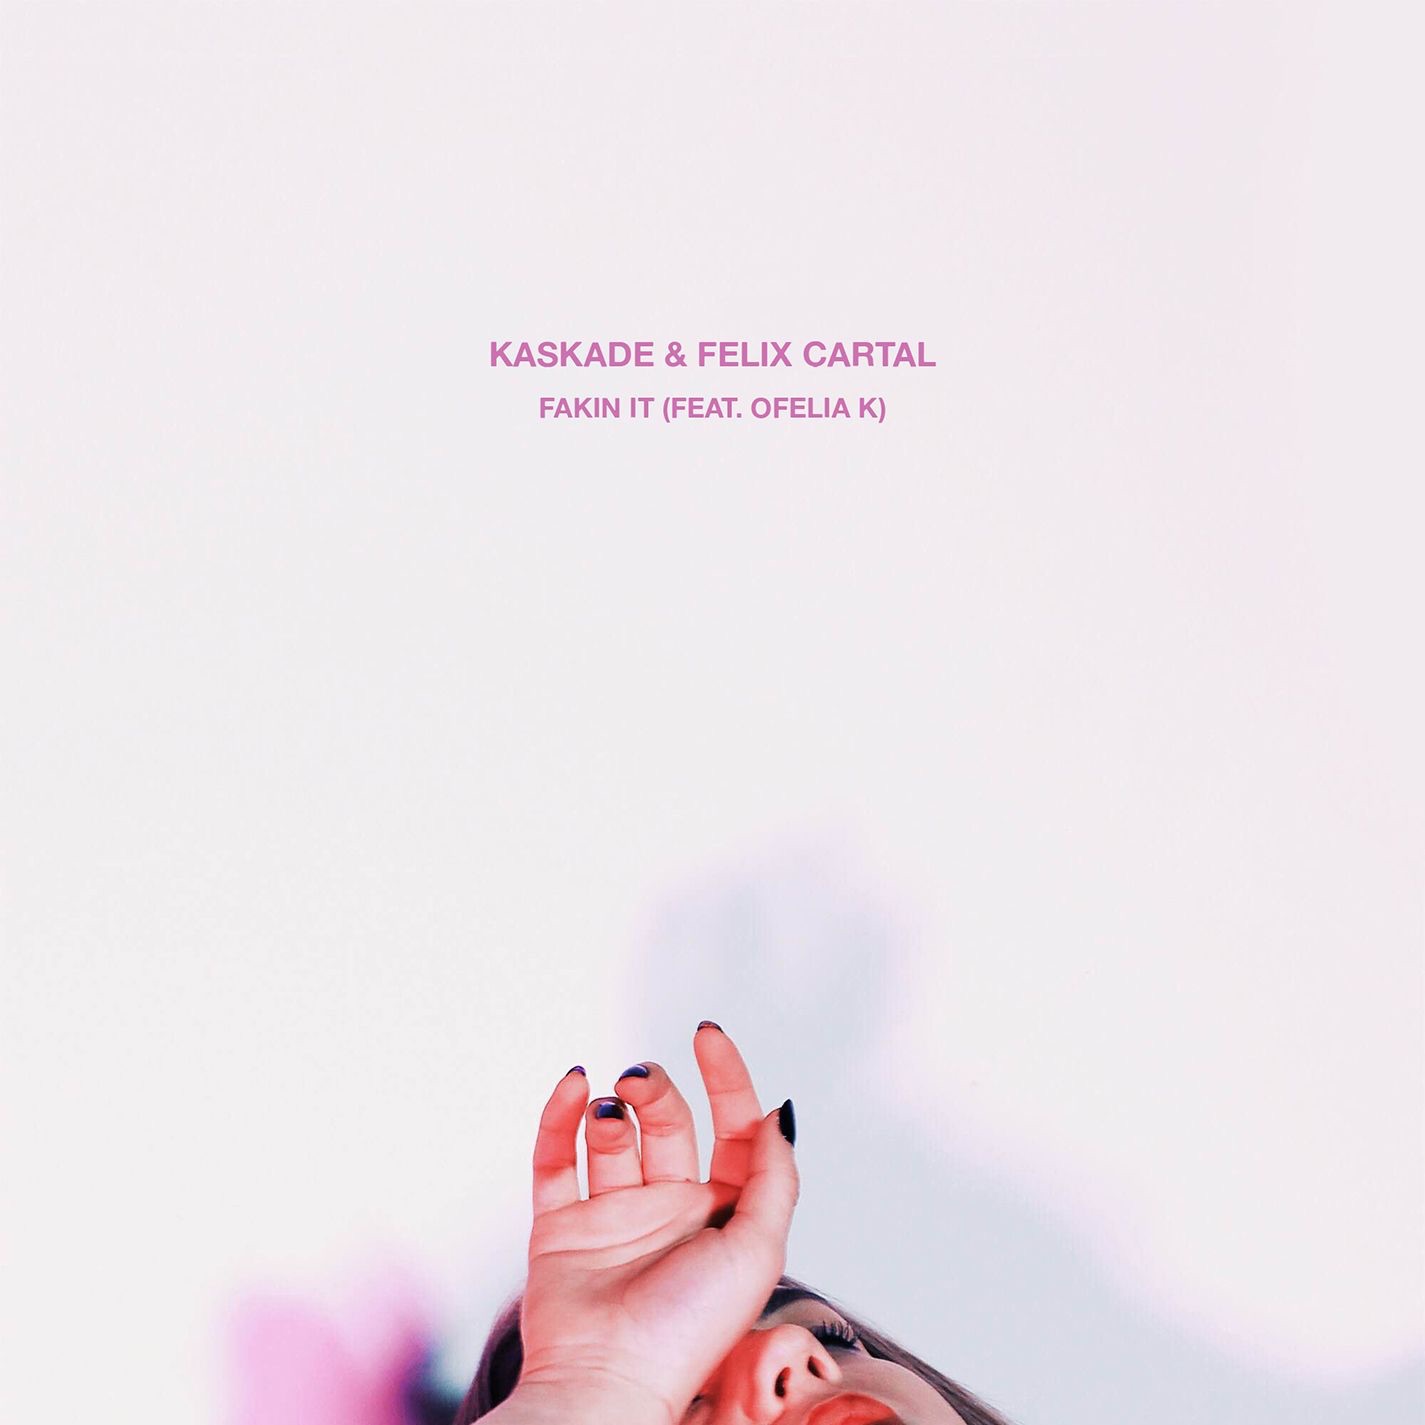 Kaskade & Felix Cartal ft. featuring Ofelia K Fakin It cover artwork